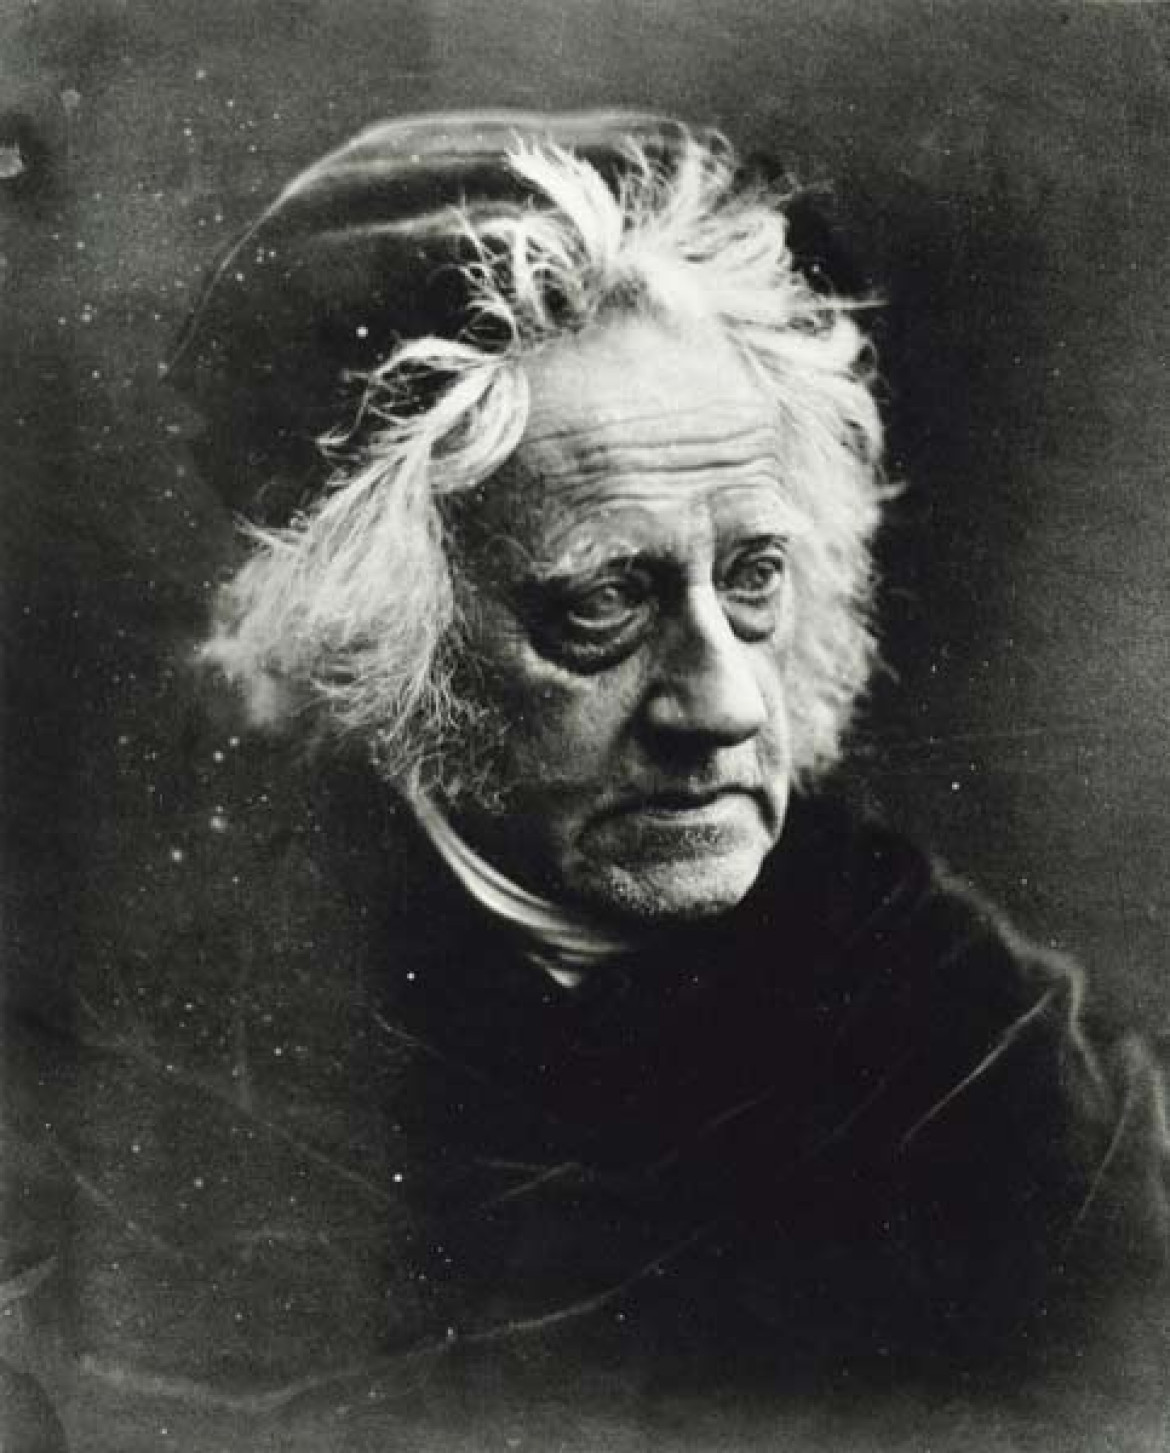 fot. Julia Margaret Cameron, Sir John Herschel z wystawy "Idylls of the King"